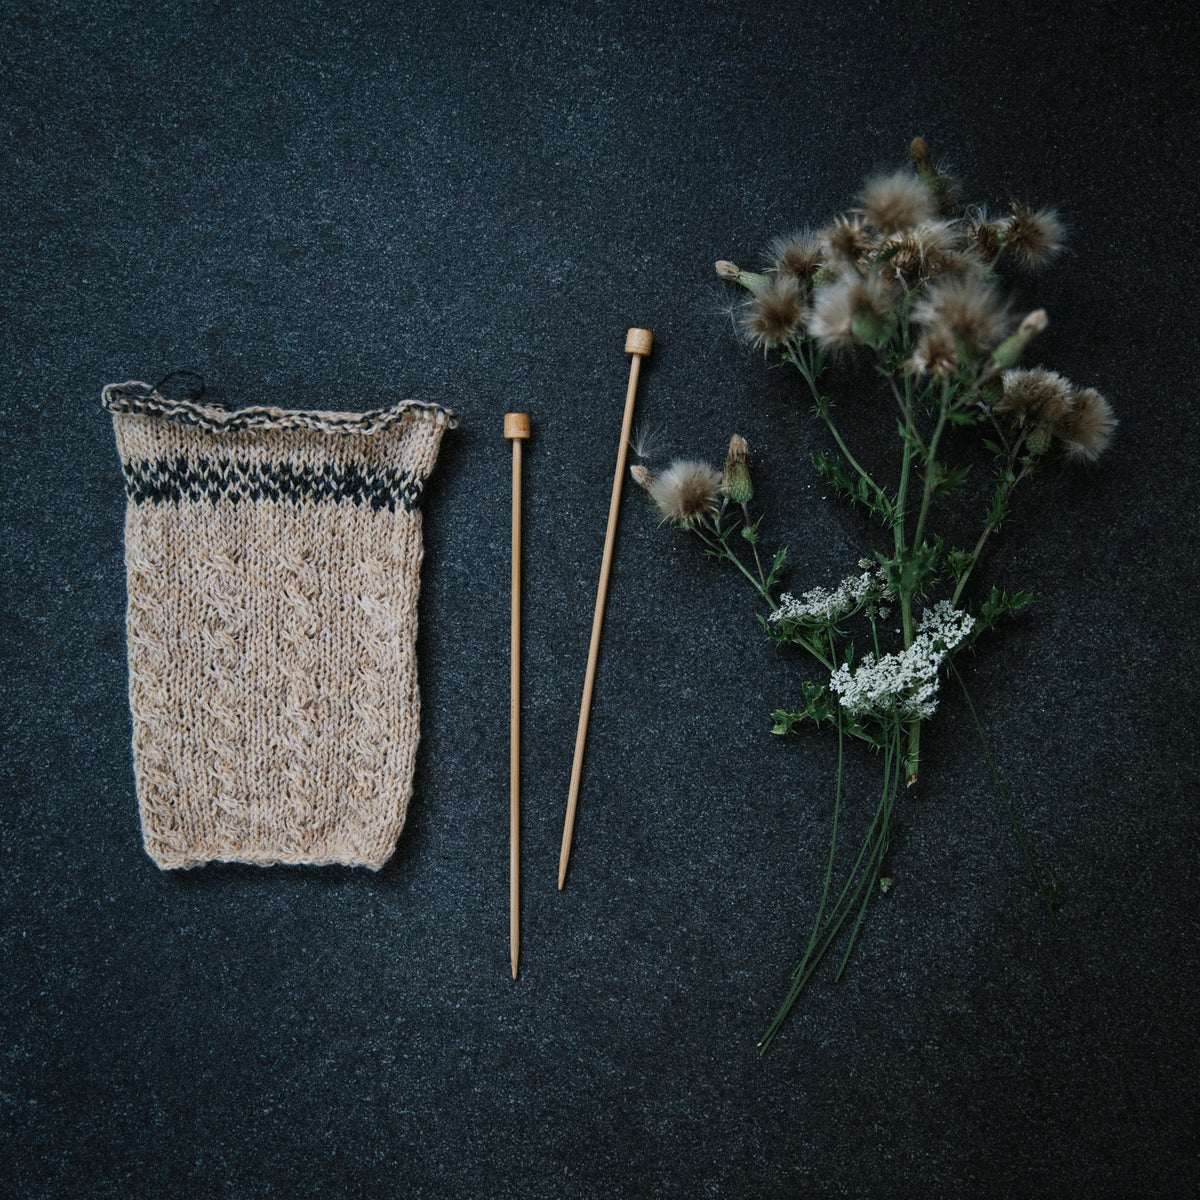 US Size 7 Bamboo Circular Knitting Needles. Various Lengths. -  Ireland